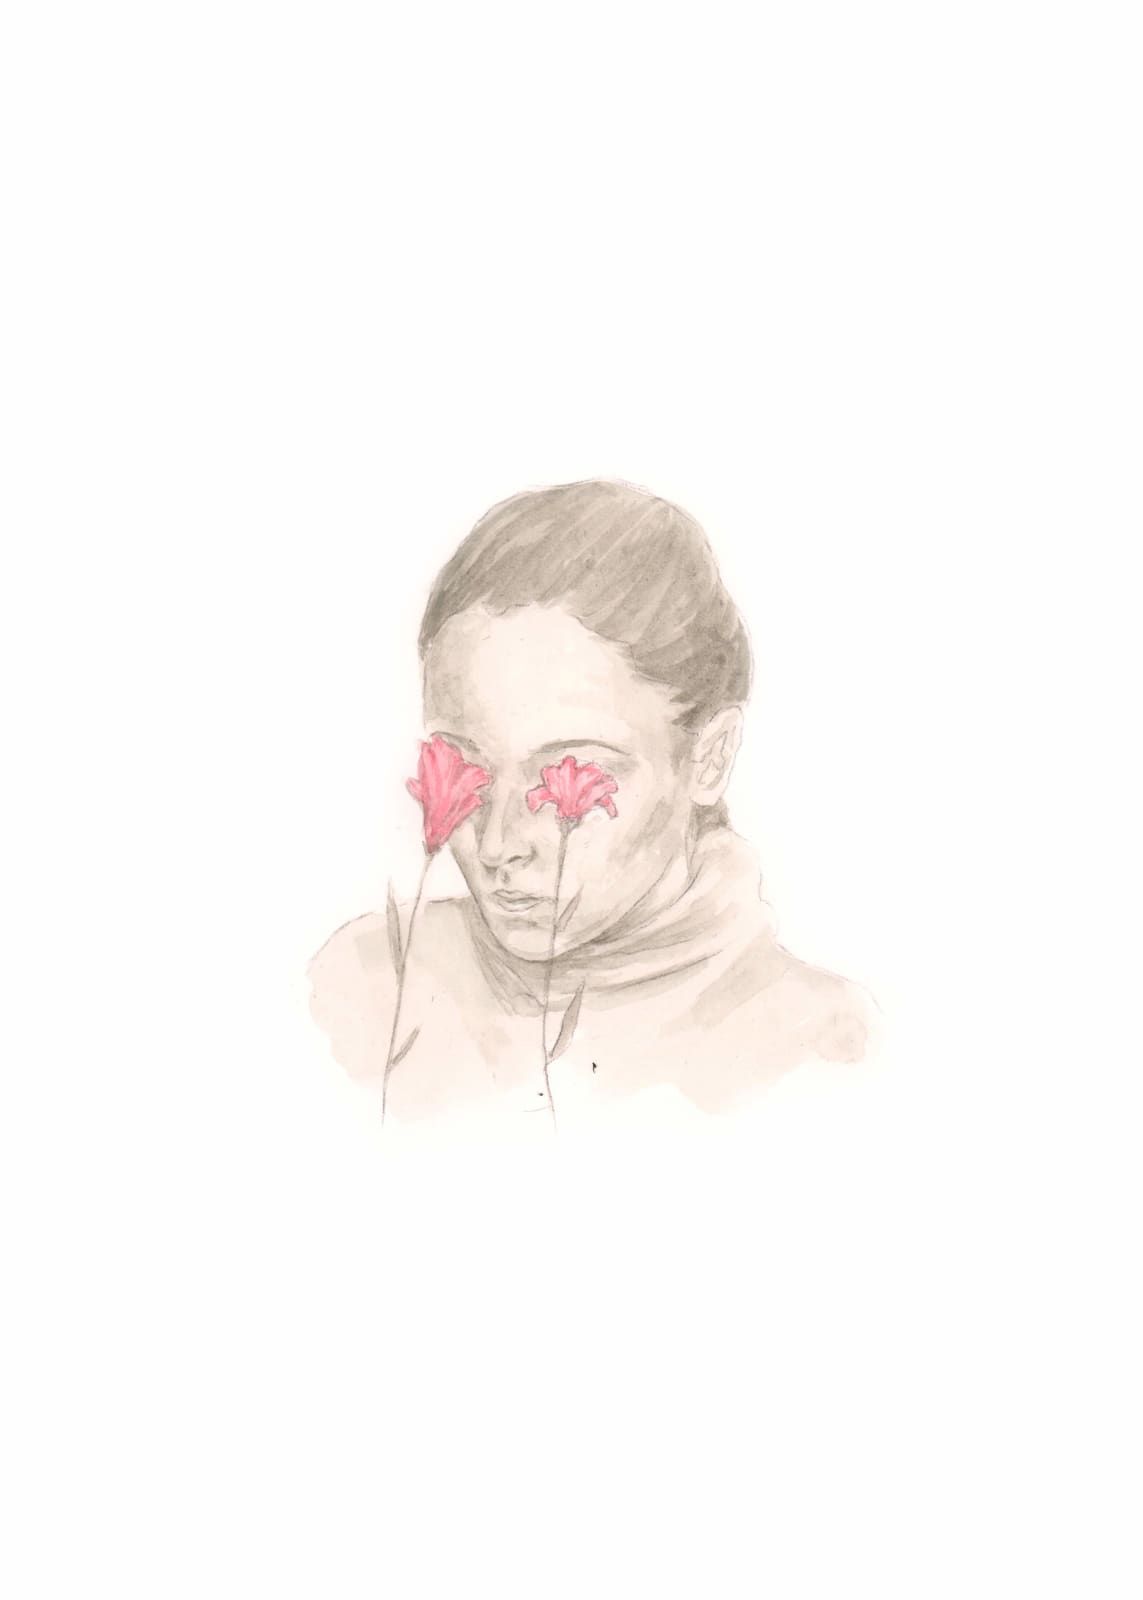 Rachel Goodyear, Flowers in Eyes, 2021